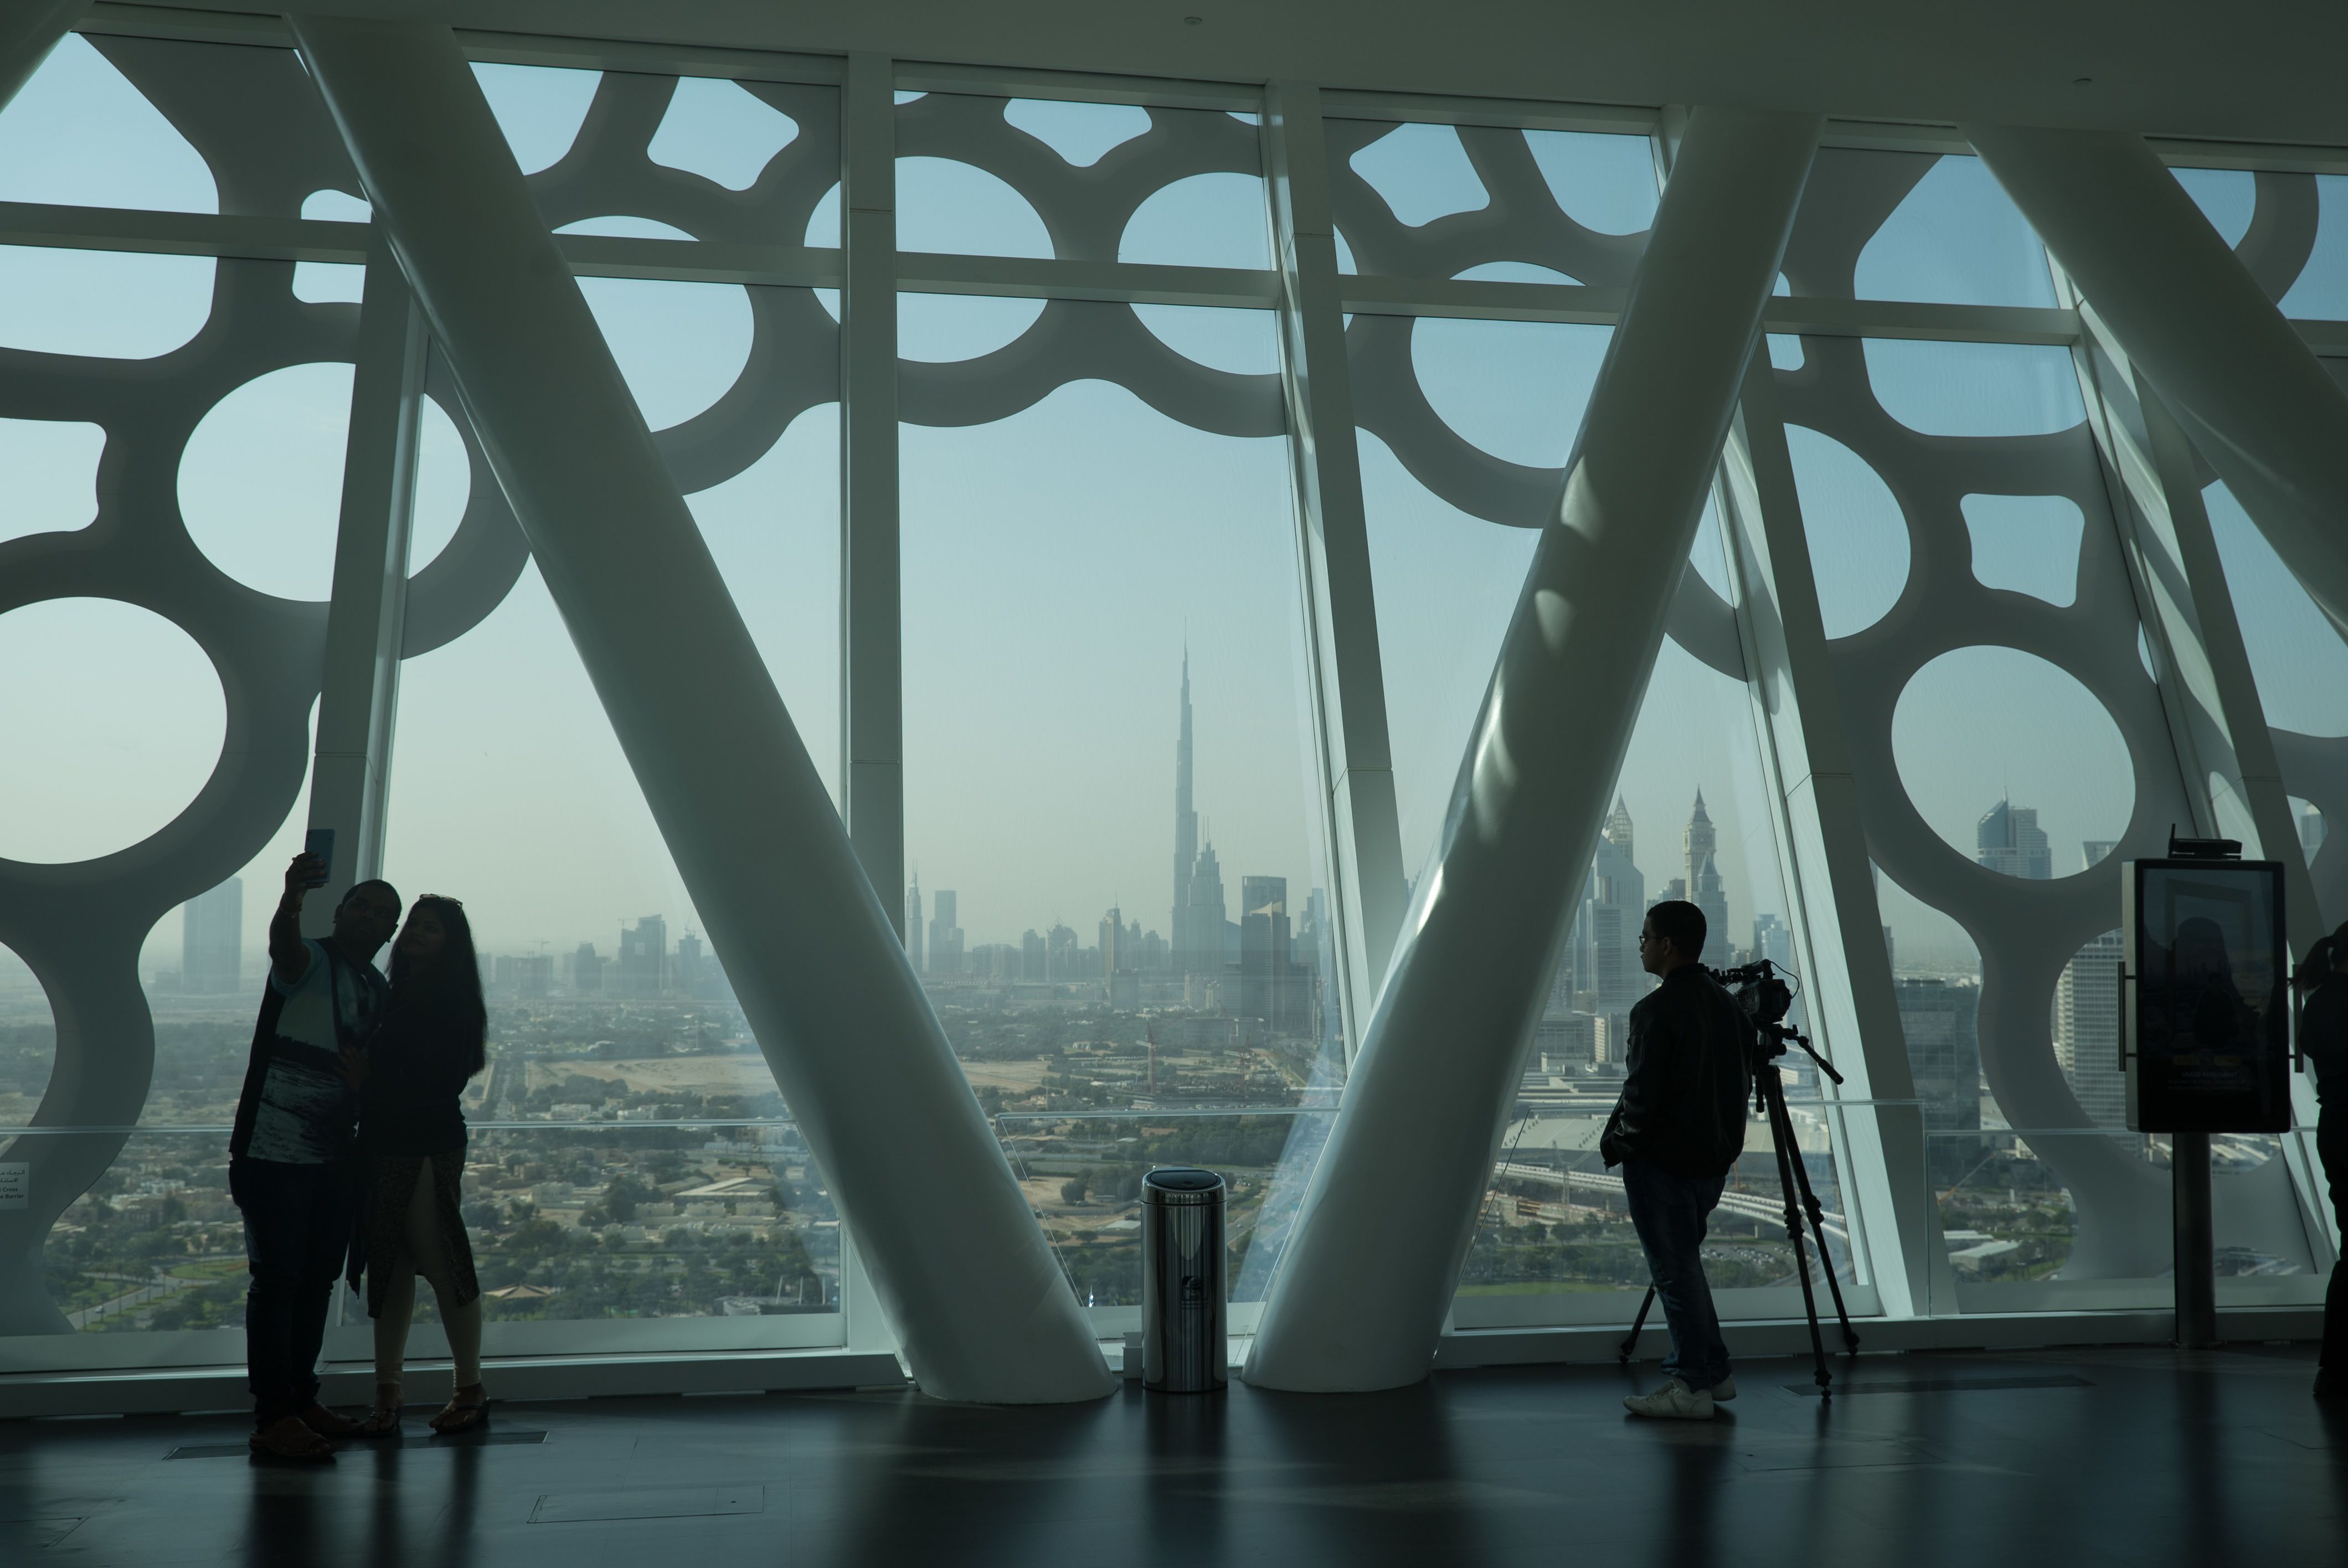 Dubai Frame: Emirate's controversial mega structure opens | CNN